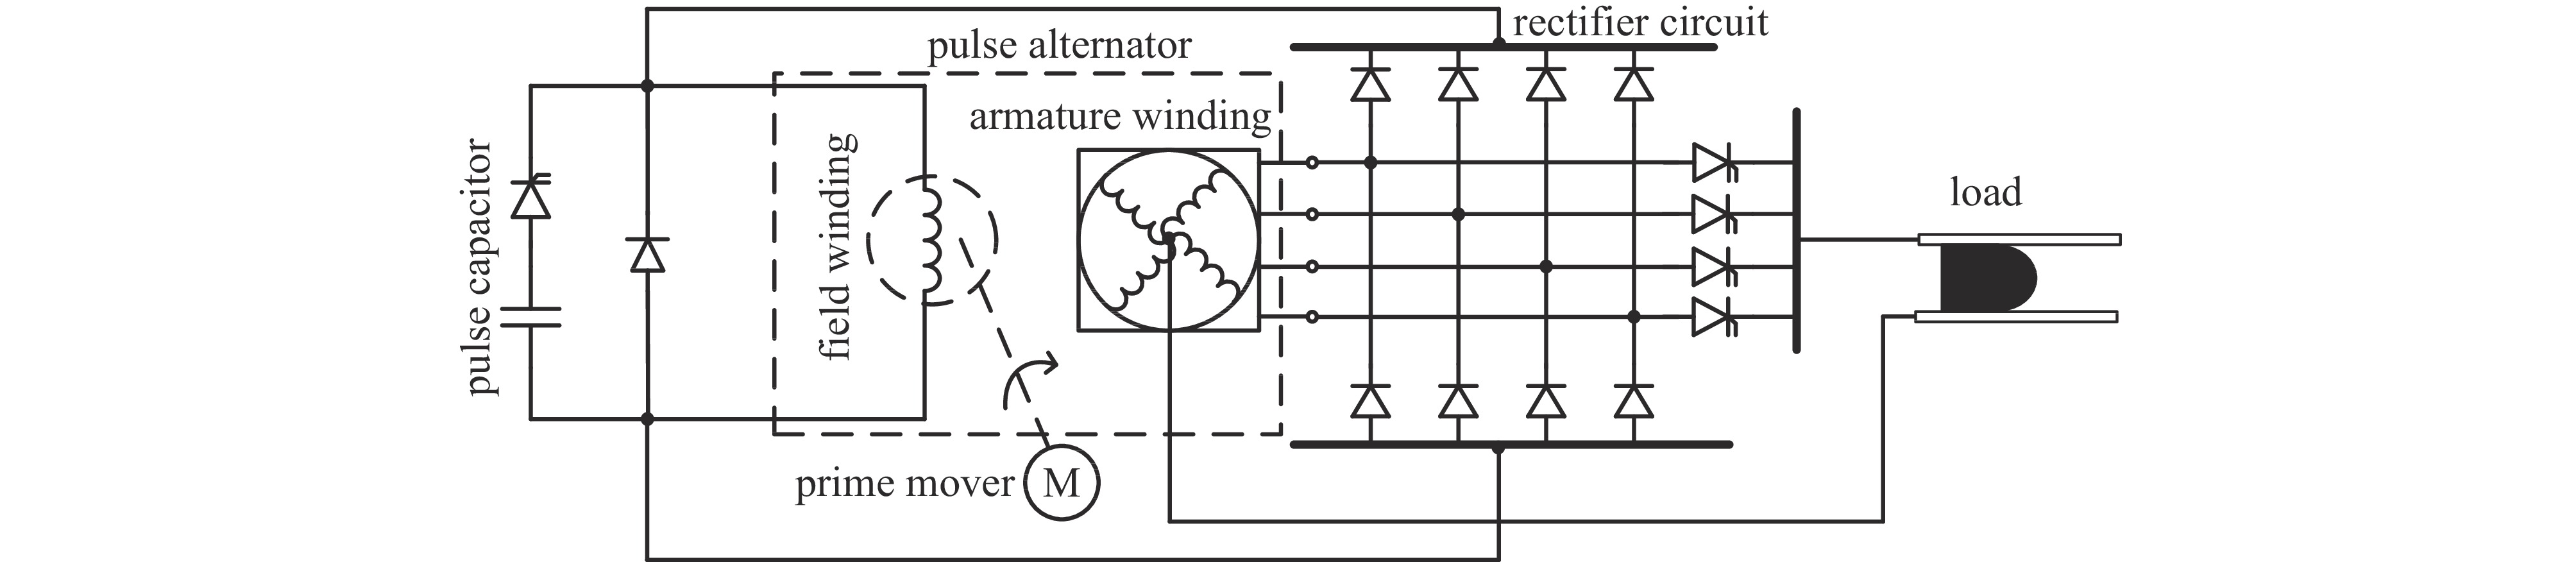 Traditional pulse alternator topology